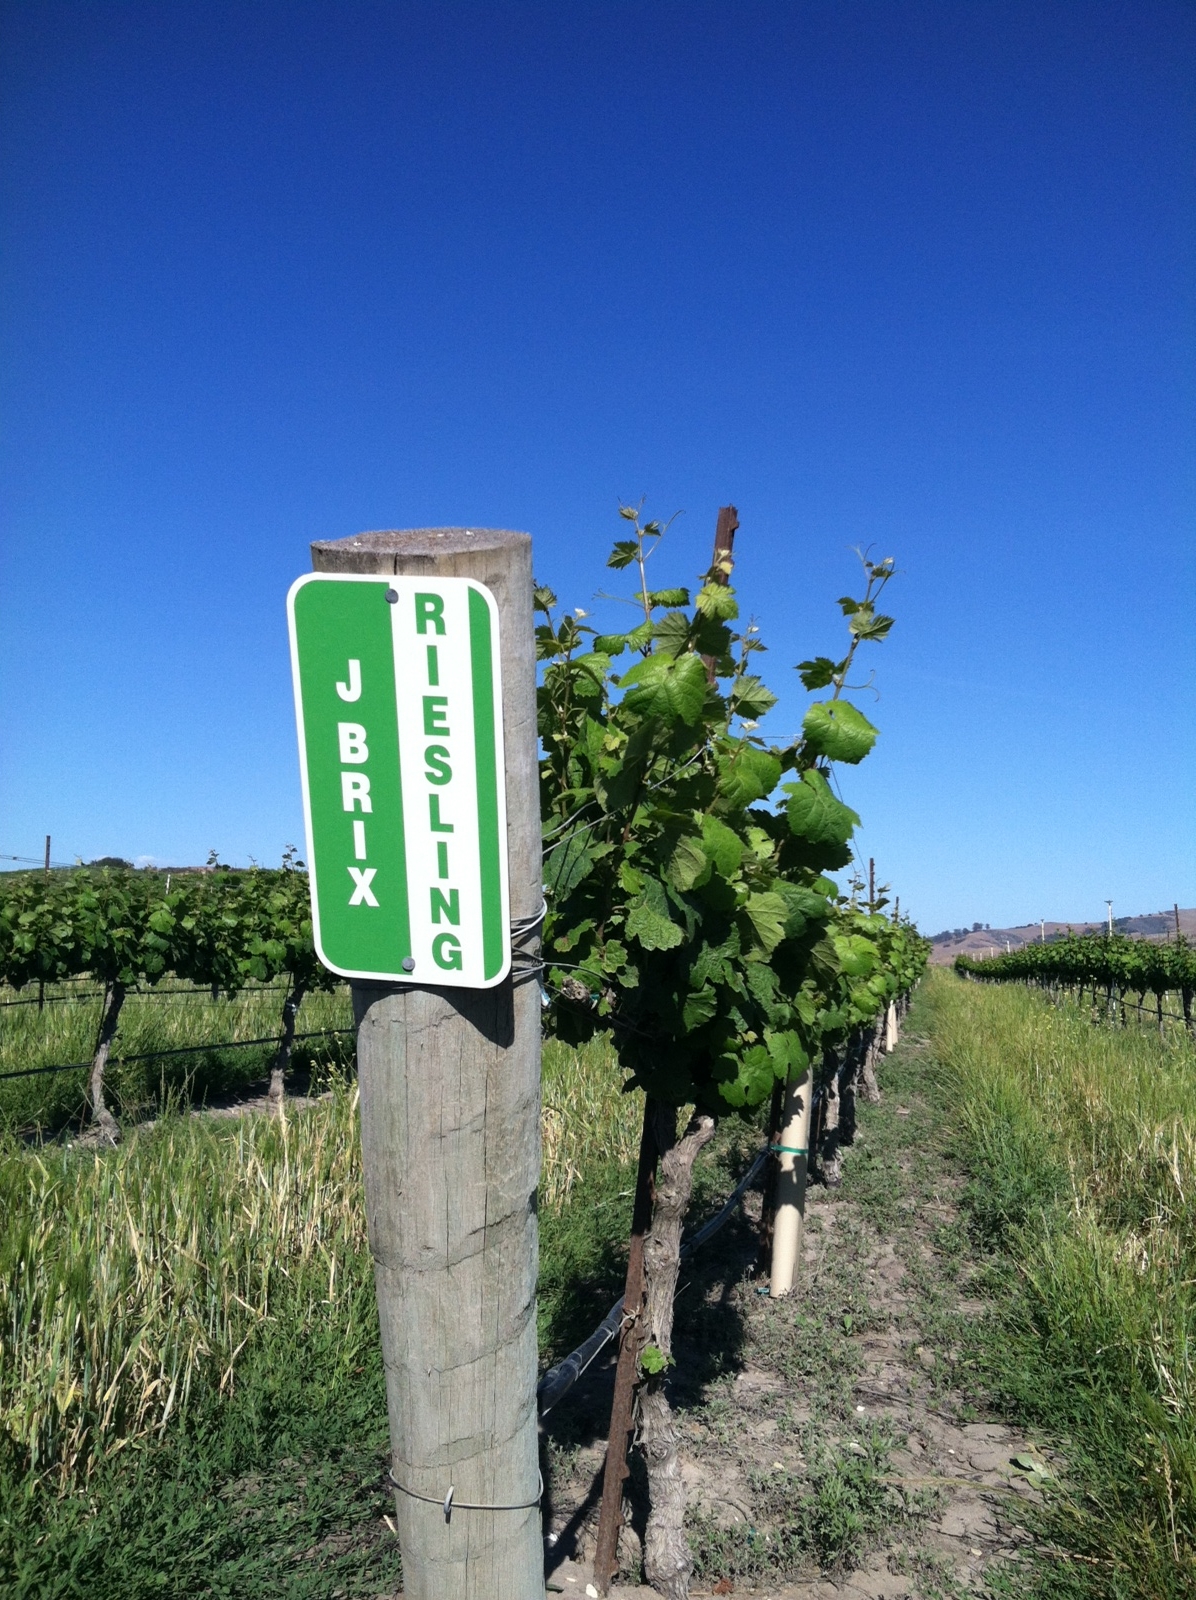 J. Brix Riesling sign on vineyard post